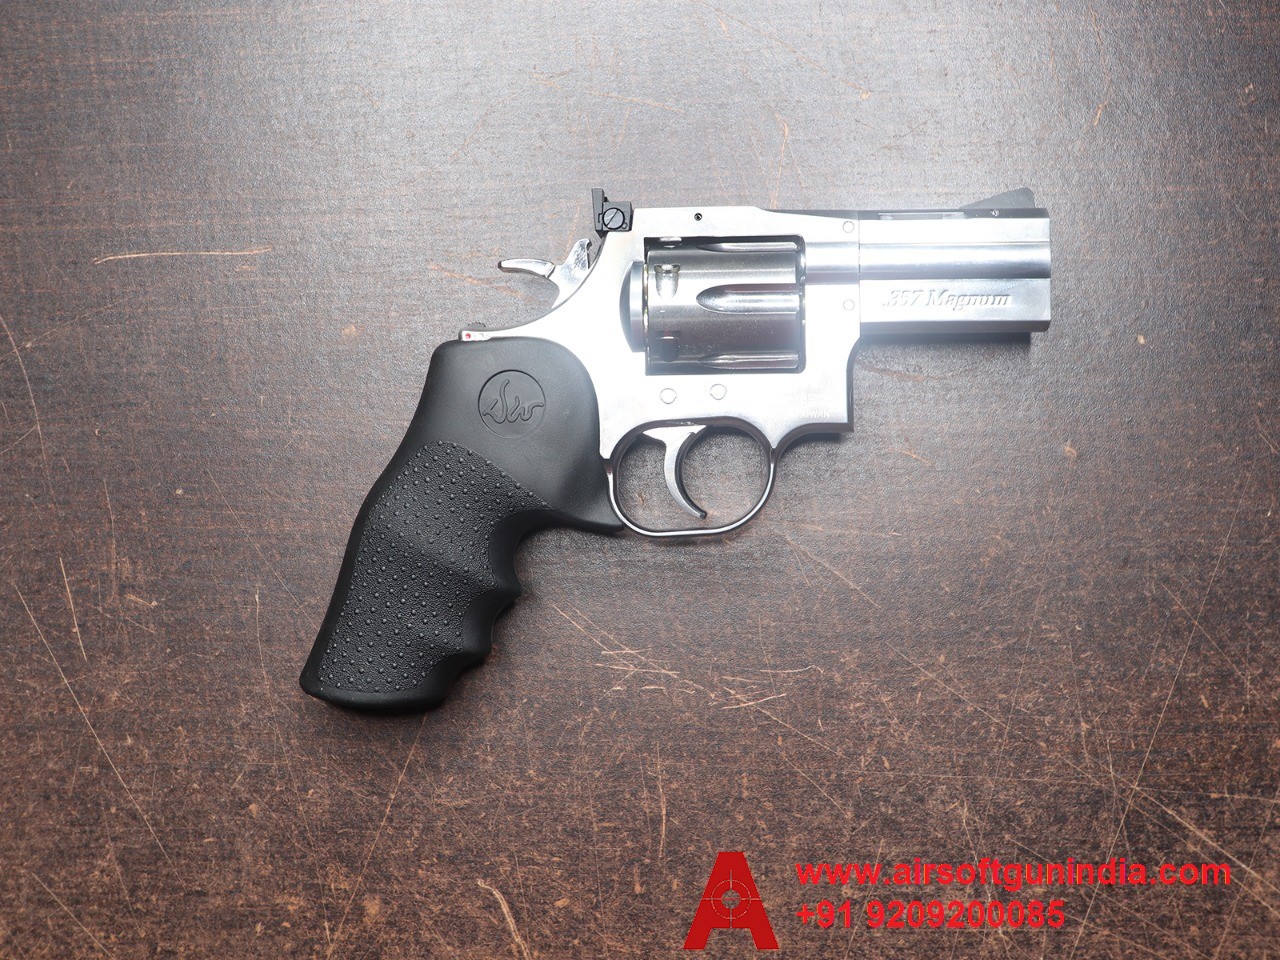 Dan Wesson 715 2.5 Inch .177Cal, 4.5mm Co2 BB Air Revolver By Airsoft Gun India